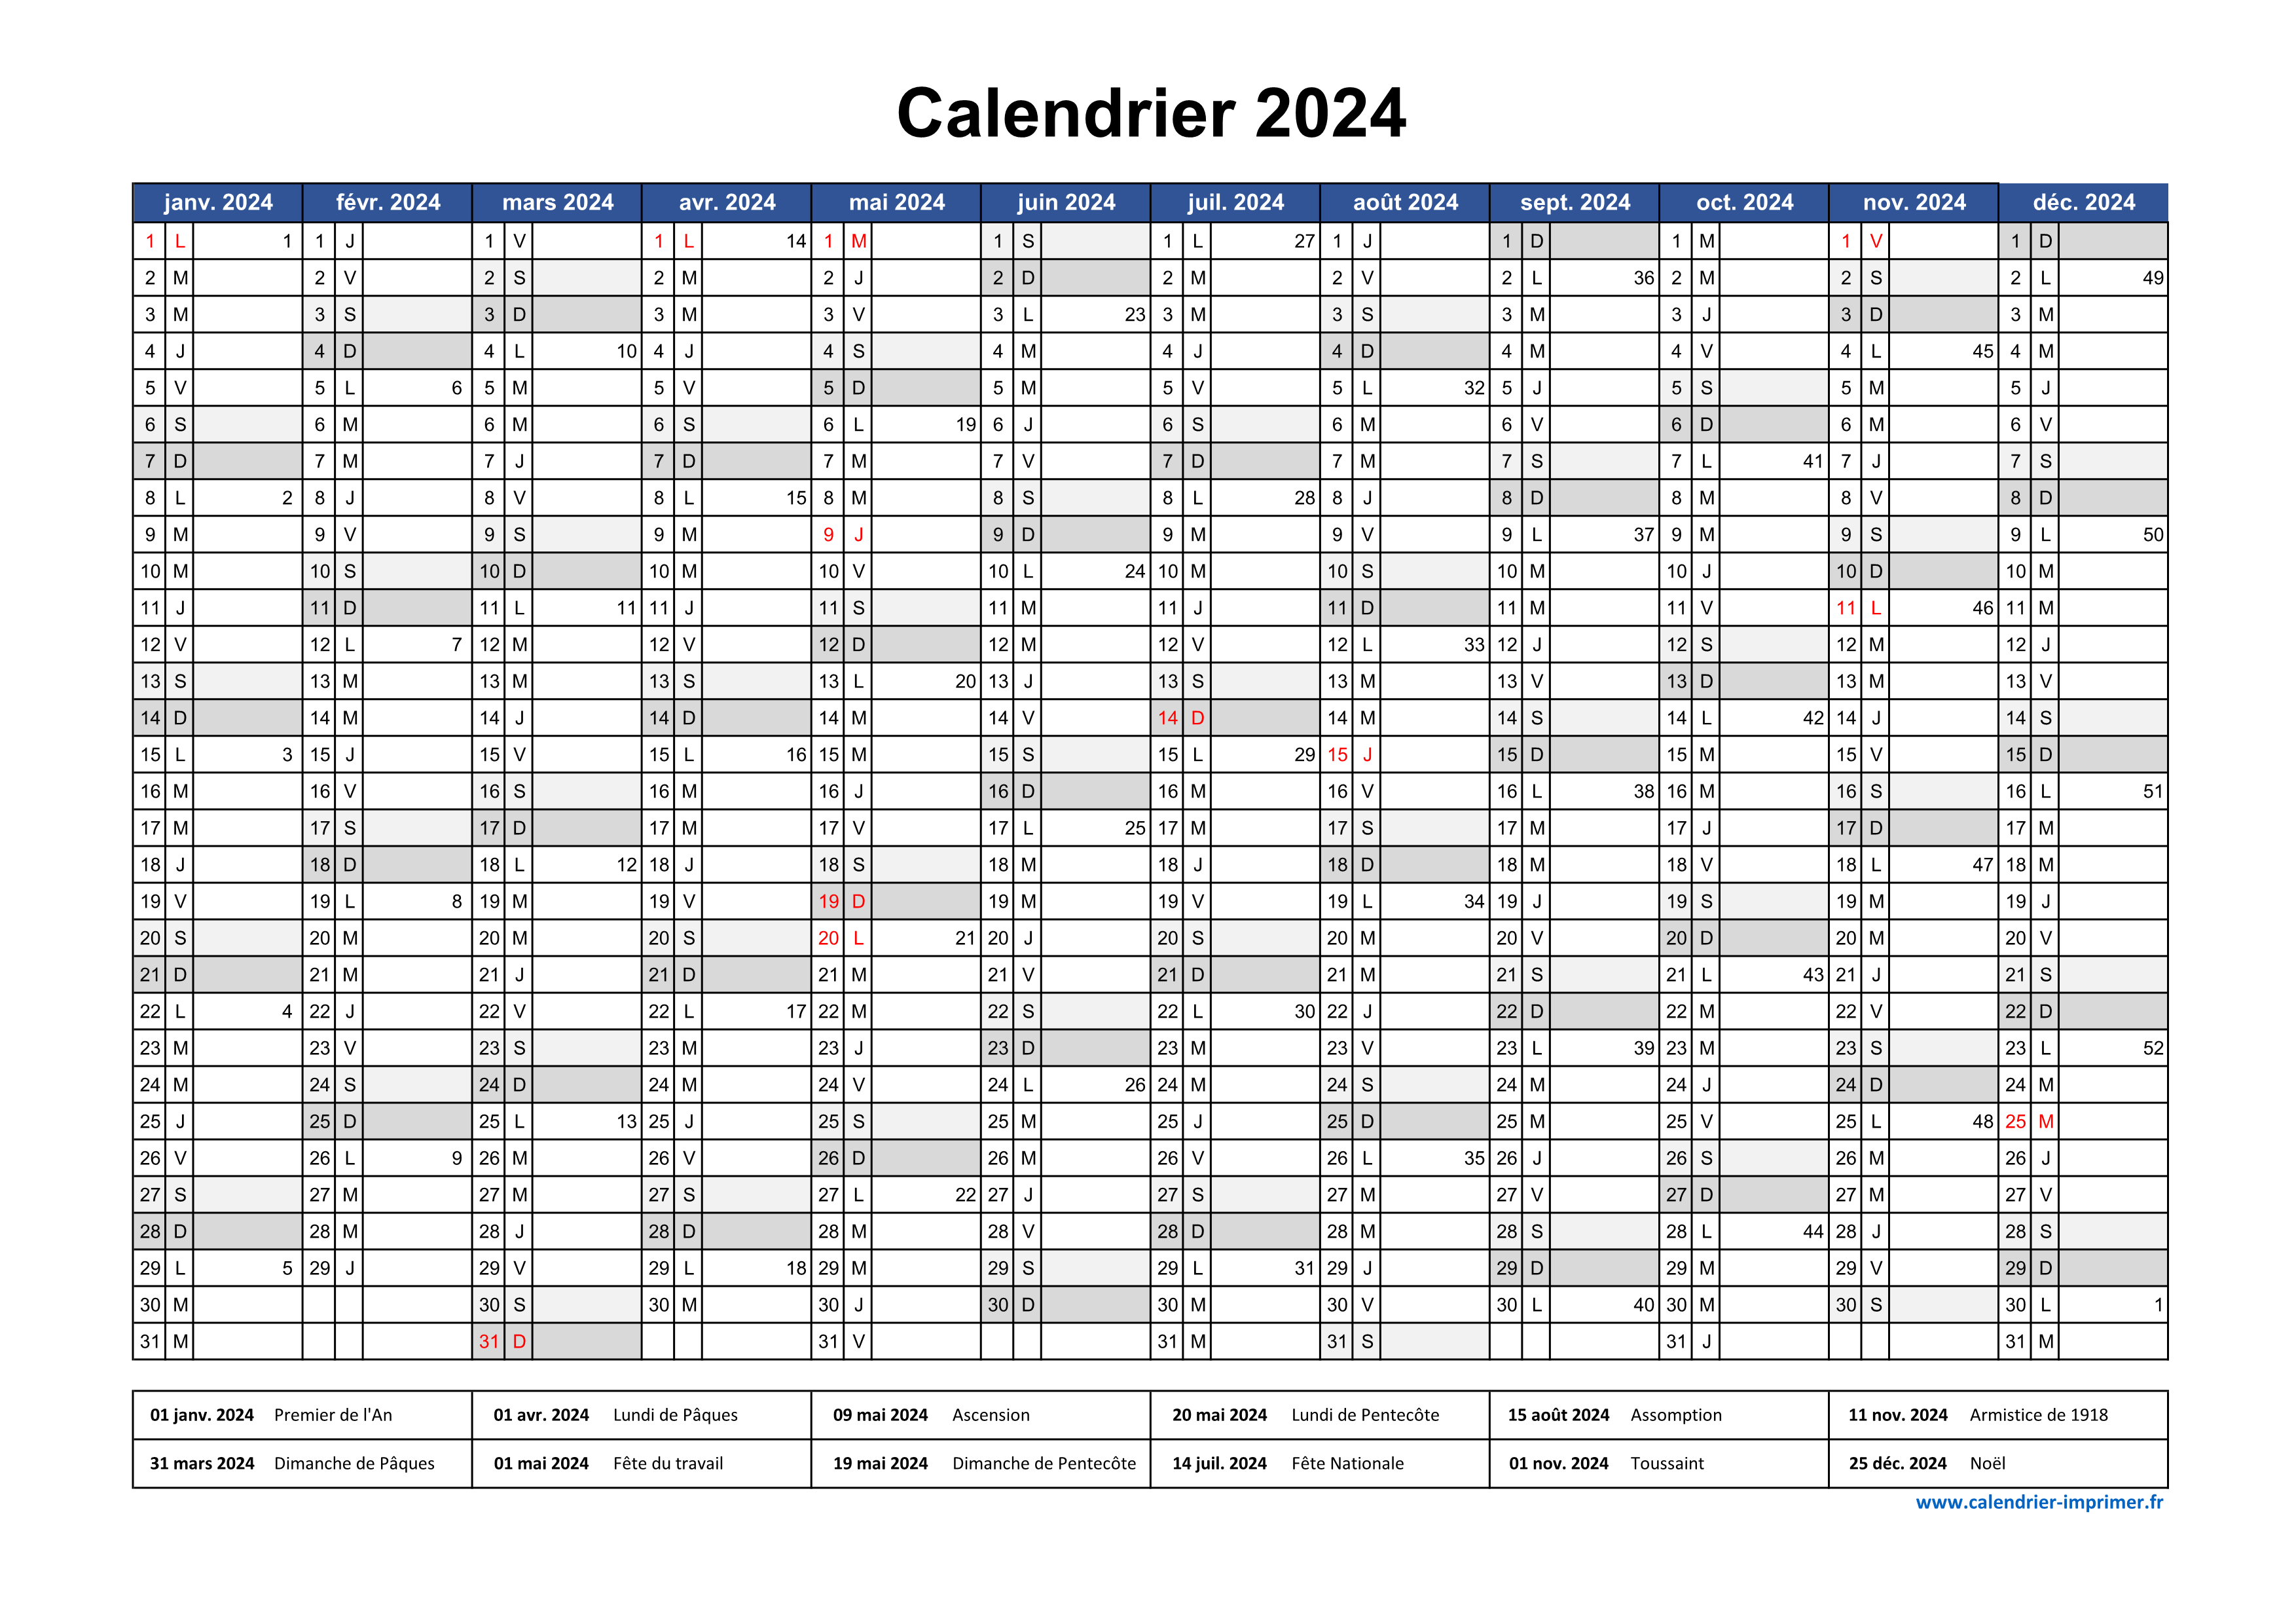 Calendrier 2024 format A4